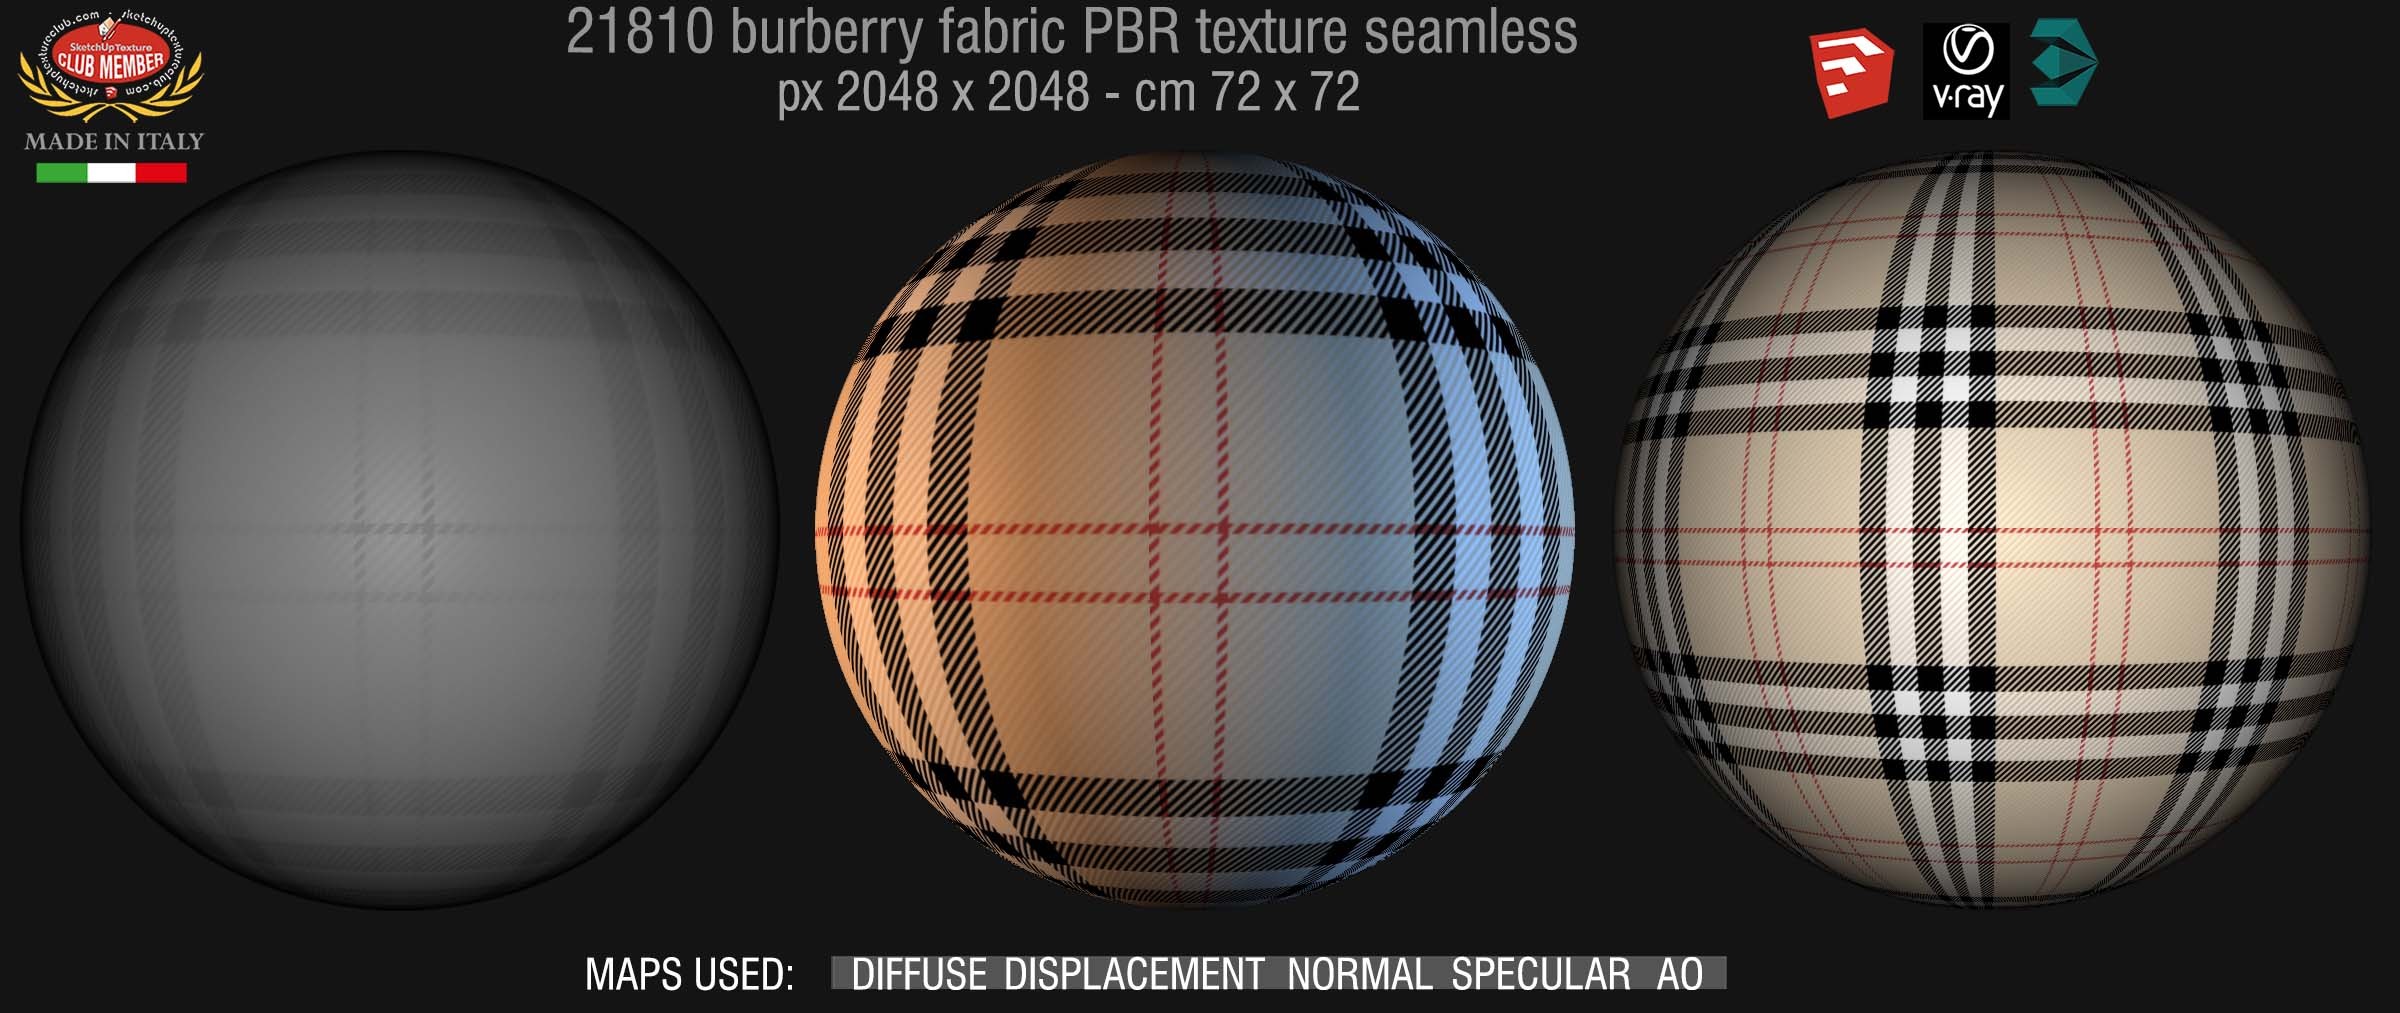 burberry fabric PBR texture seamless 21810